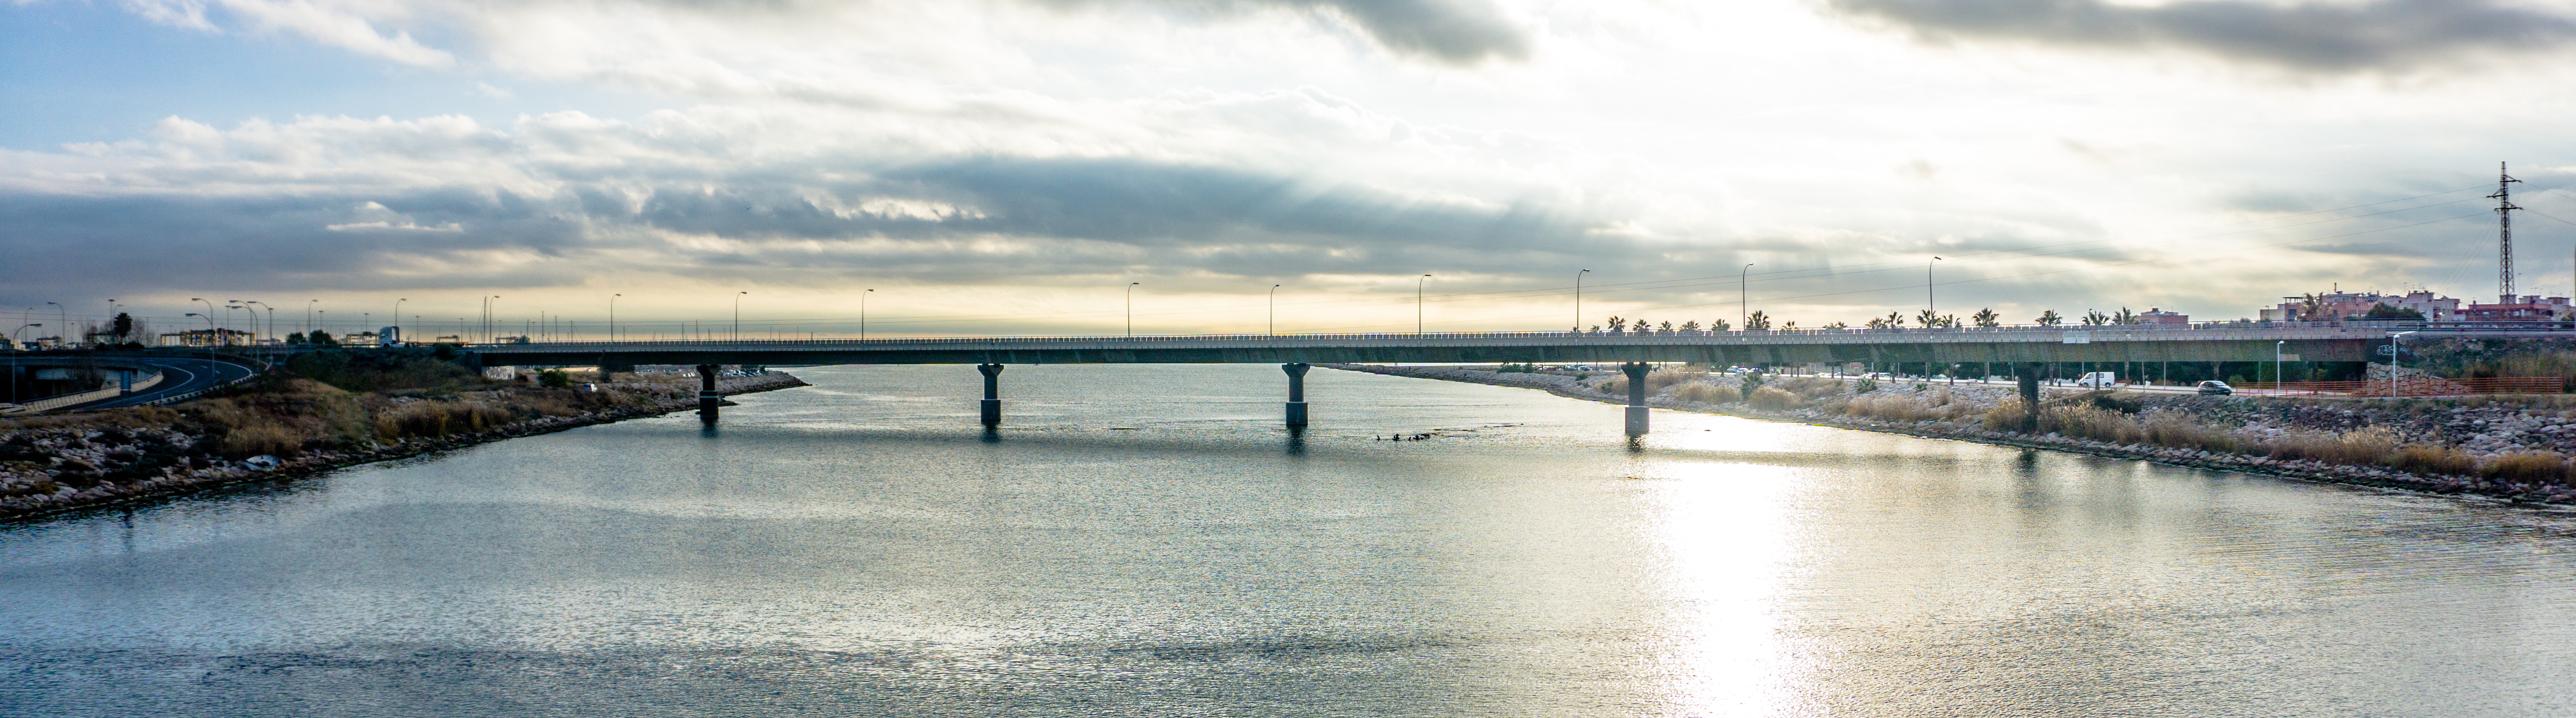 Panoramic Photography of Bridge Under Cloudy Sky, Bay, Panoramic, Sunlight, Sea, HQ Photo